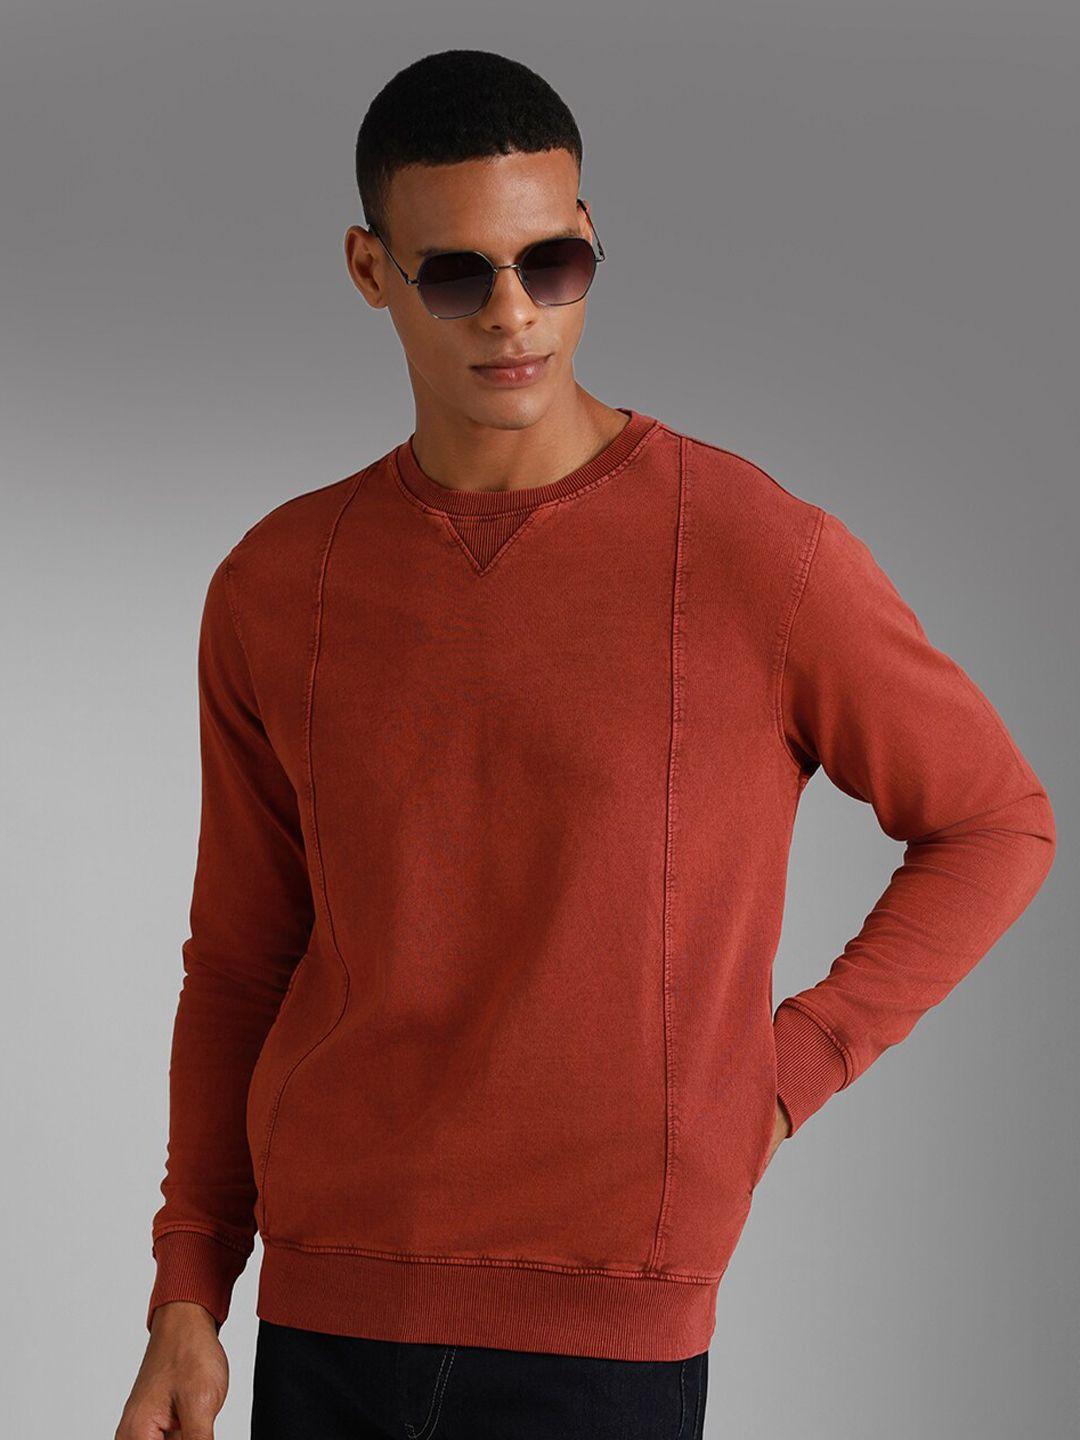 high star round neck long sleeves cotton pullover sweatshirt